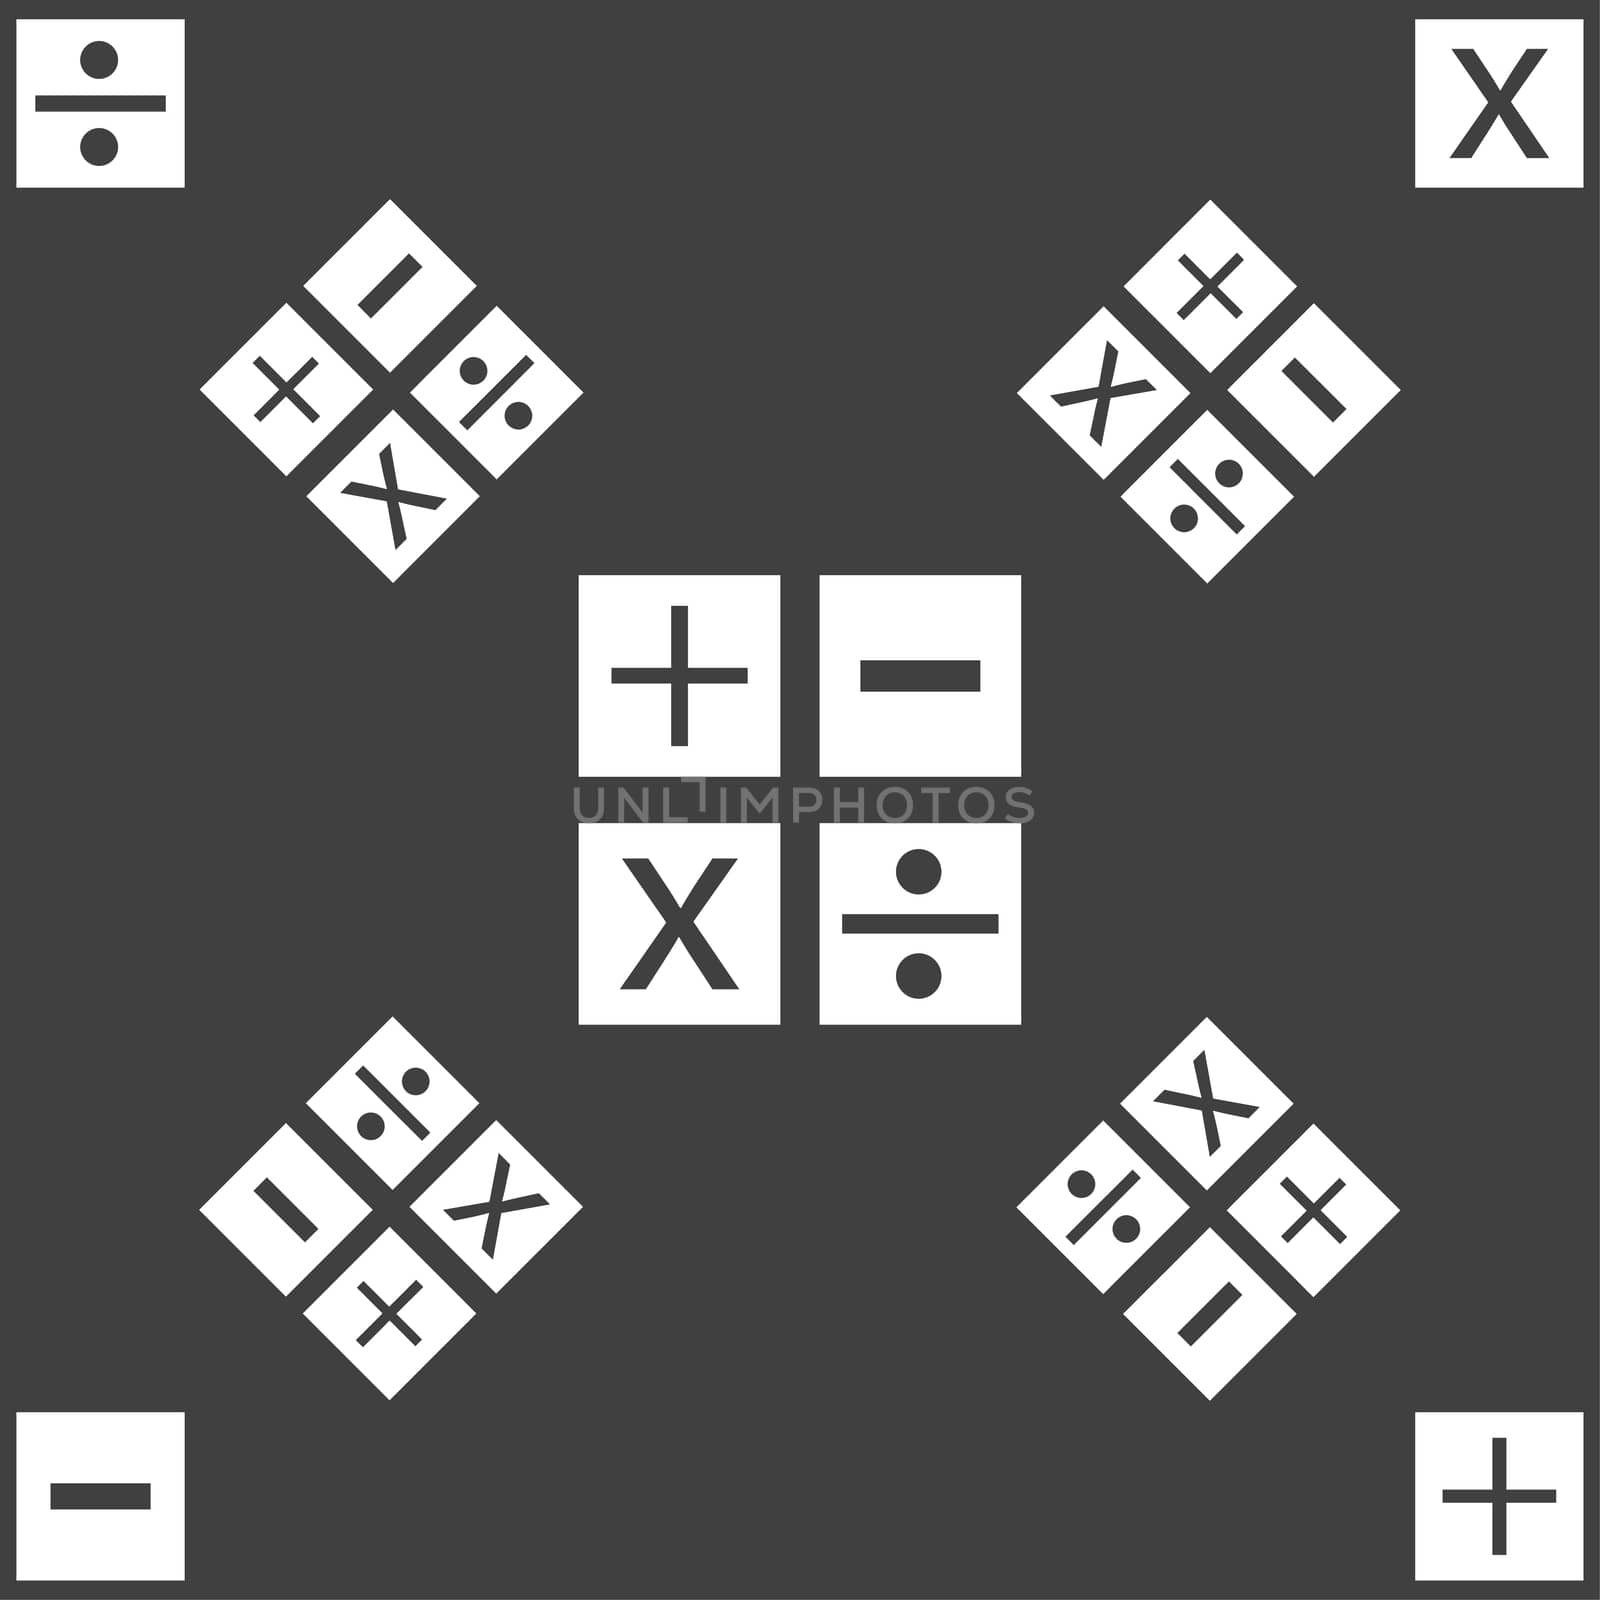 Multiplication, division, plus, minus icon Math symbol Mathematics. Seamless pattern on a gray background. illustration